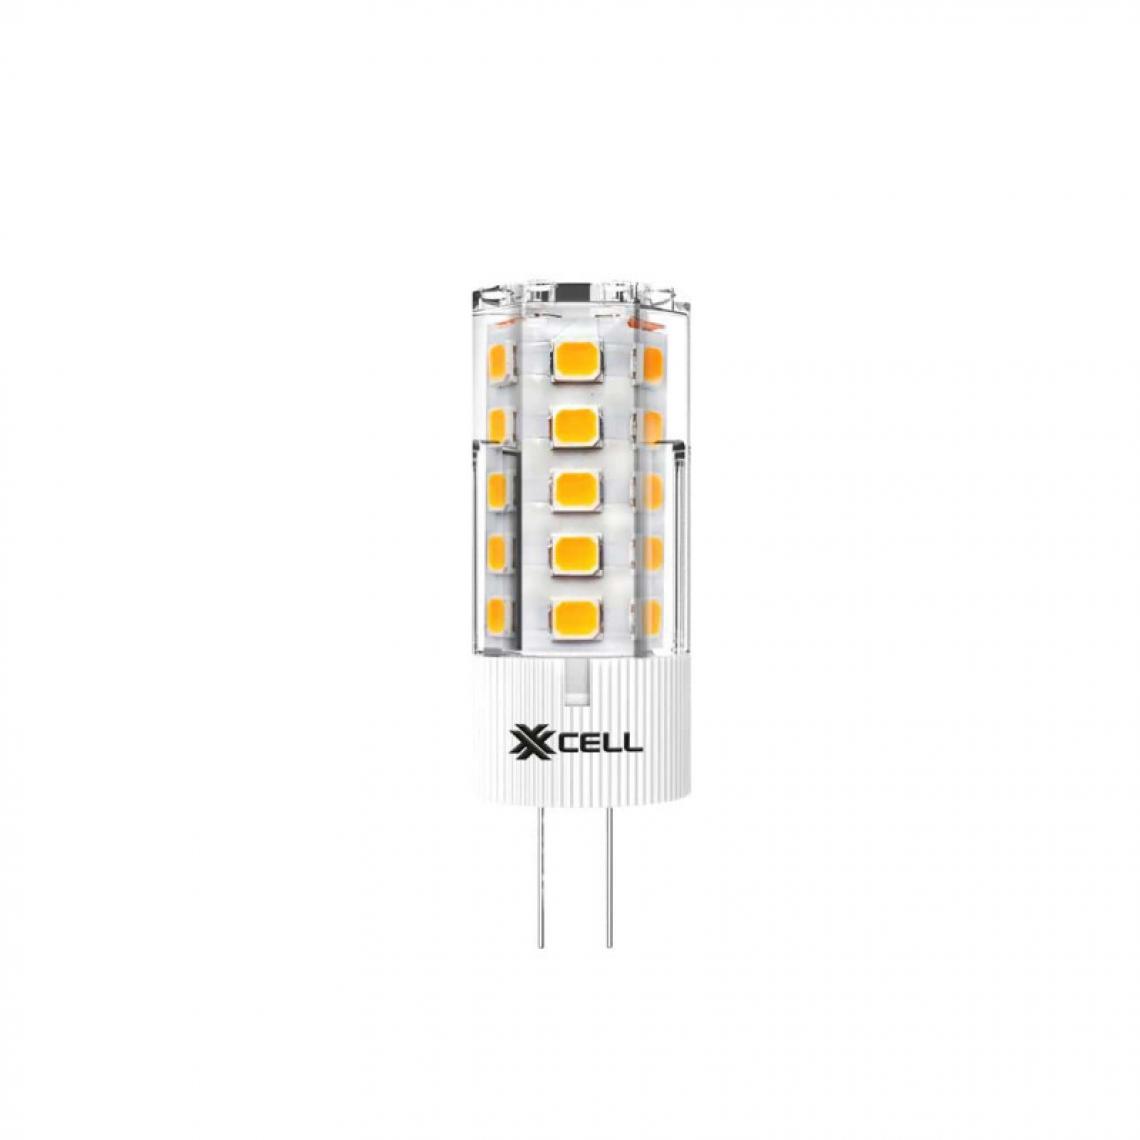 Xxcell - Ampoule LED XXCELL BI PIN - G4 12V 2.5W équivalent 25W - Ampoules LED